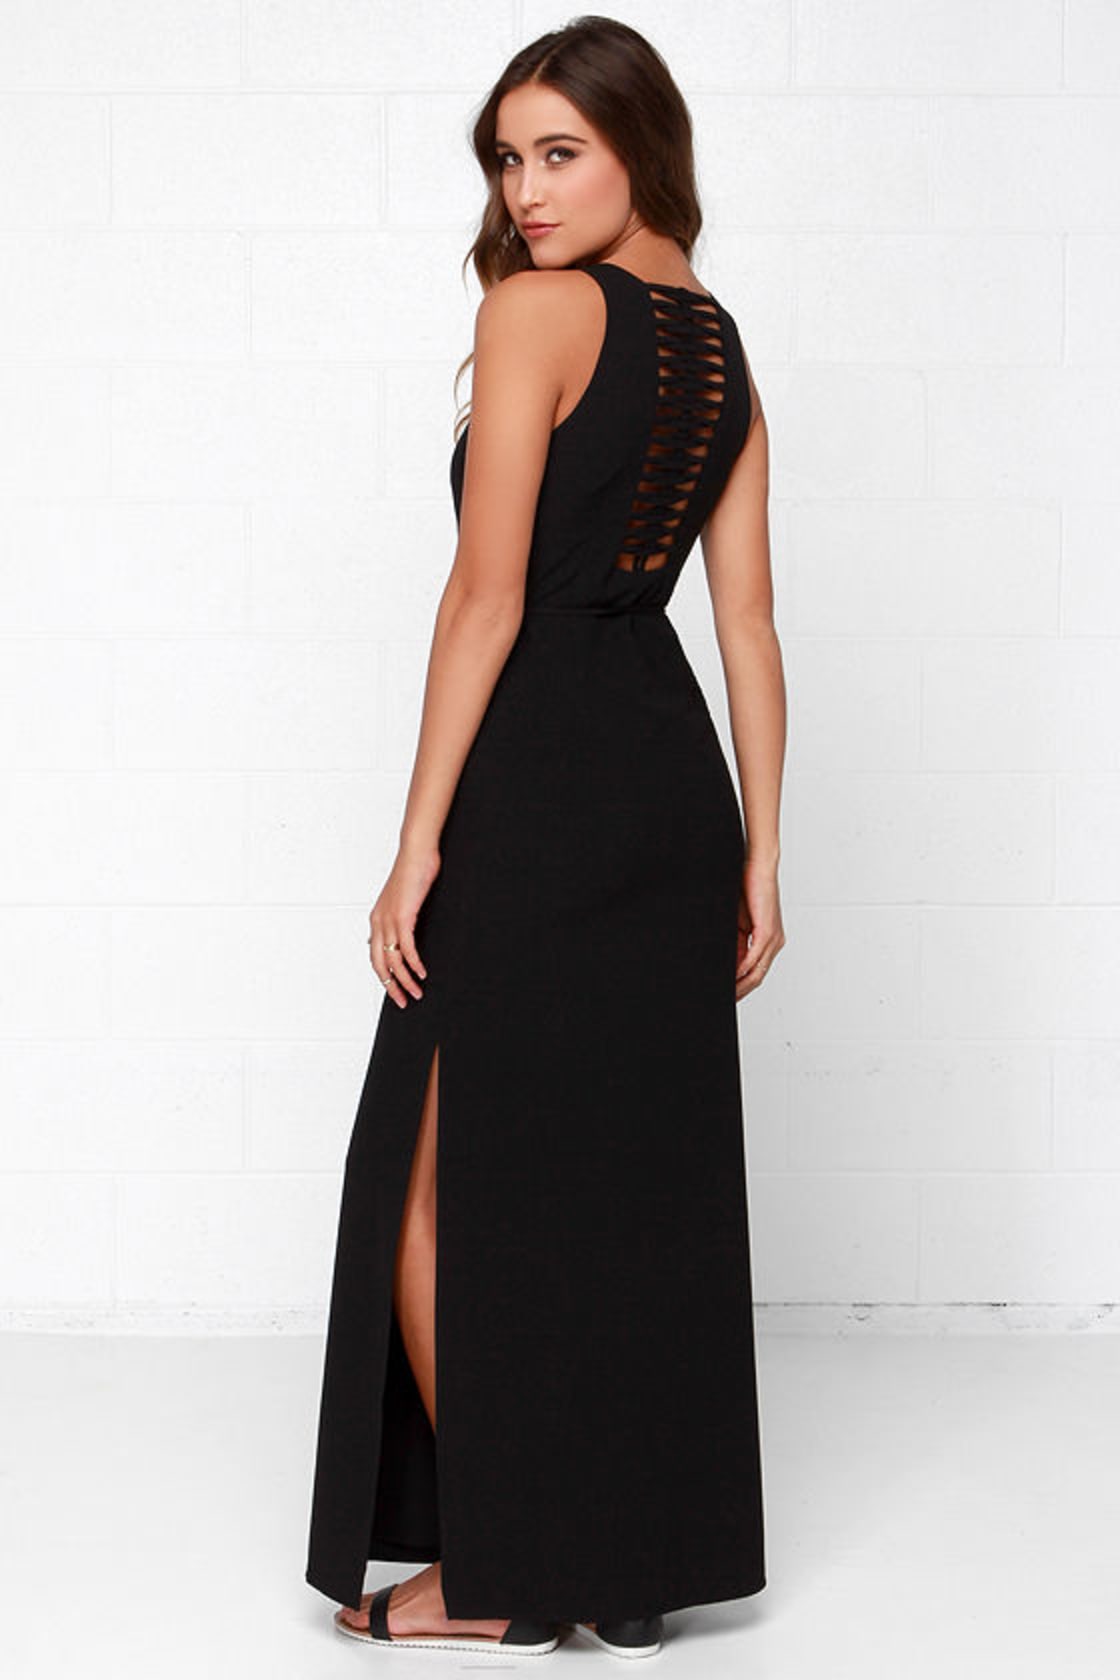 Black Swan Indulgence - Black Dress - Maxi Dress - $103.00 - Lulus